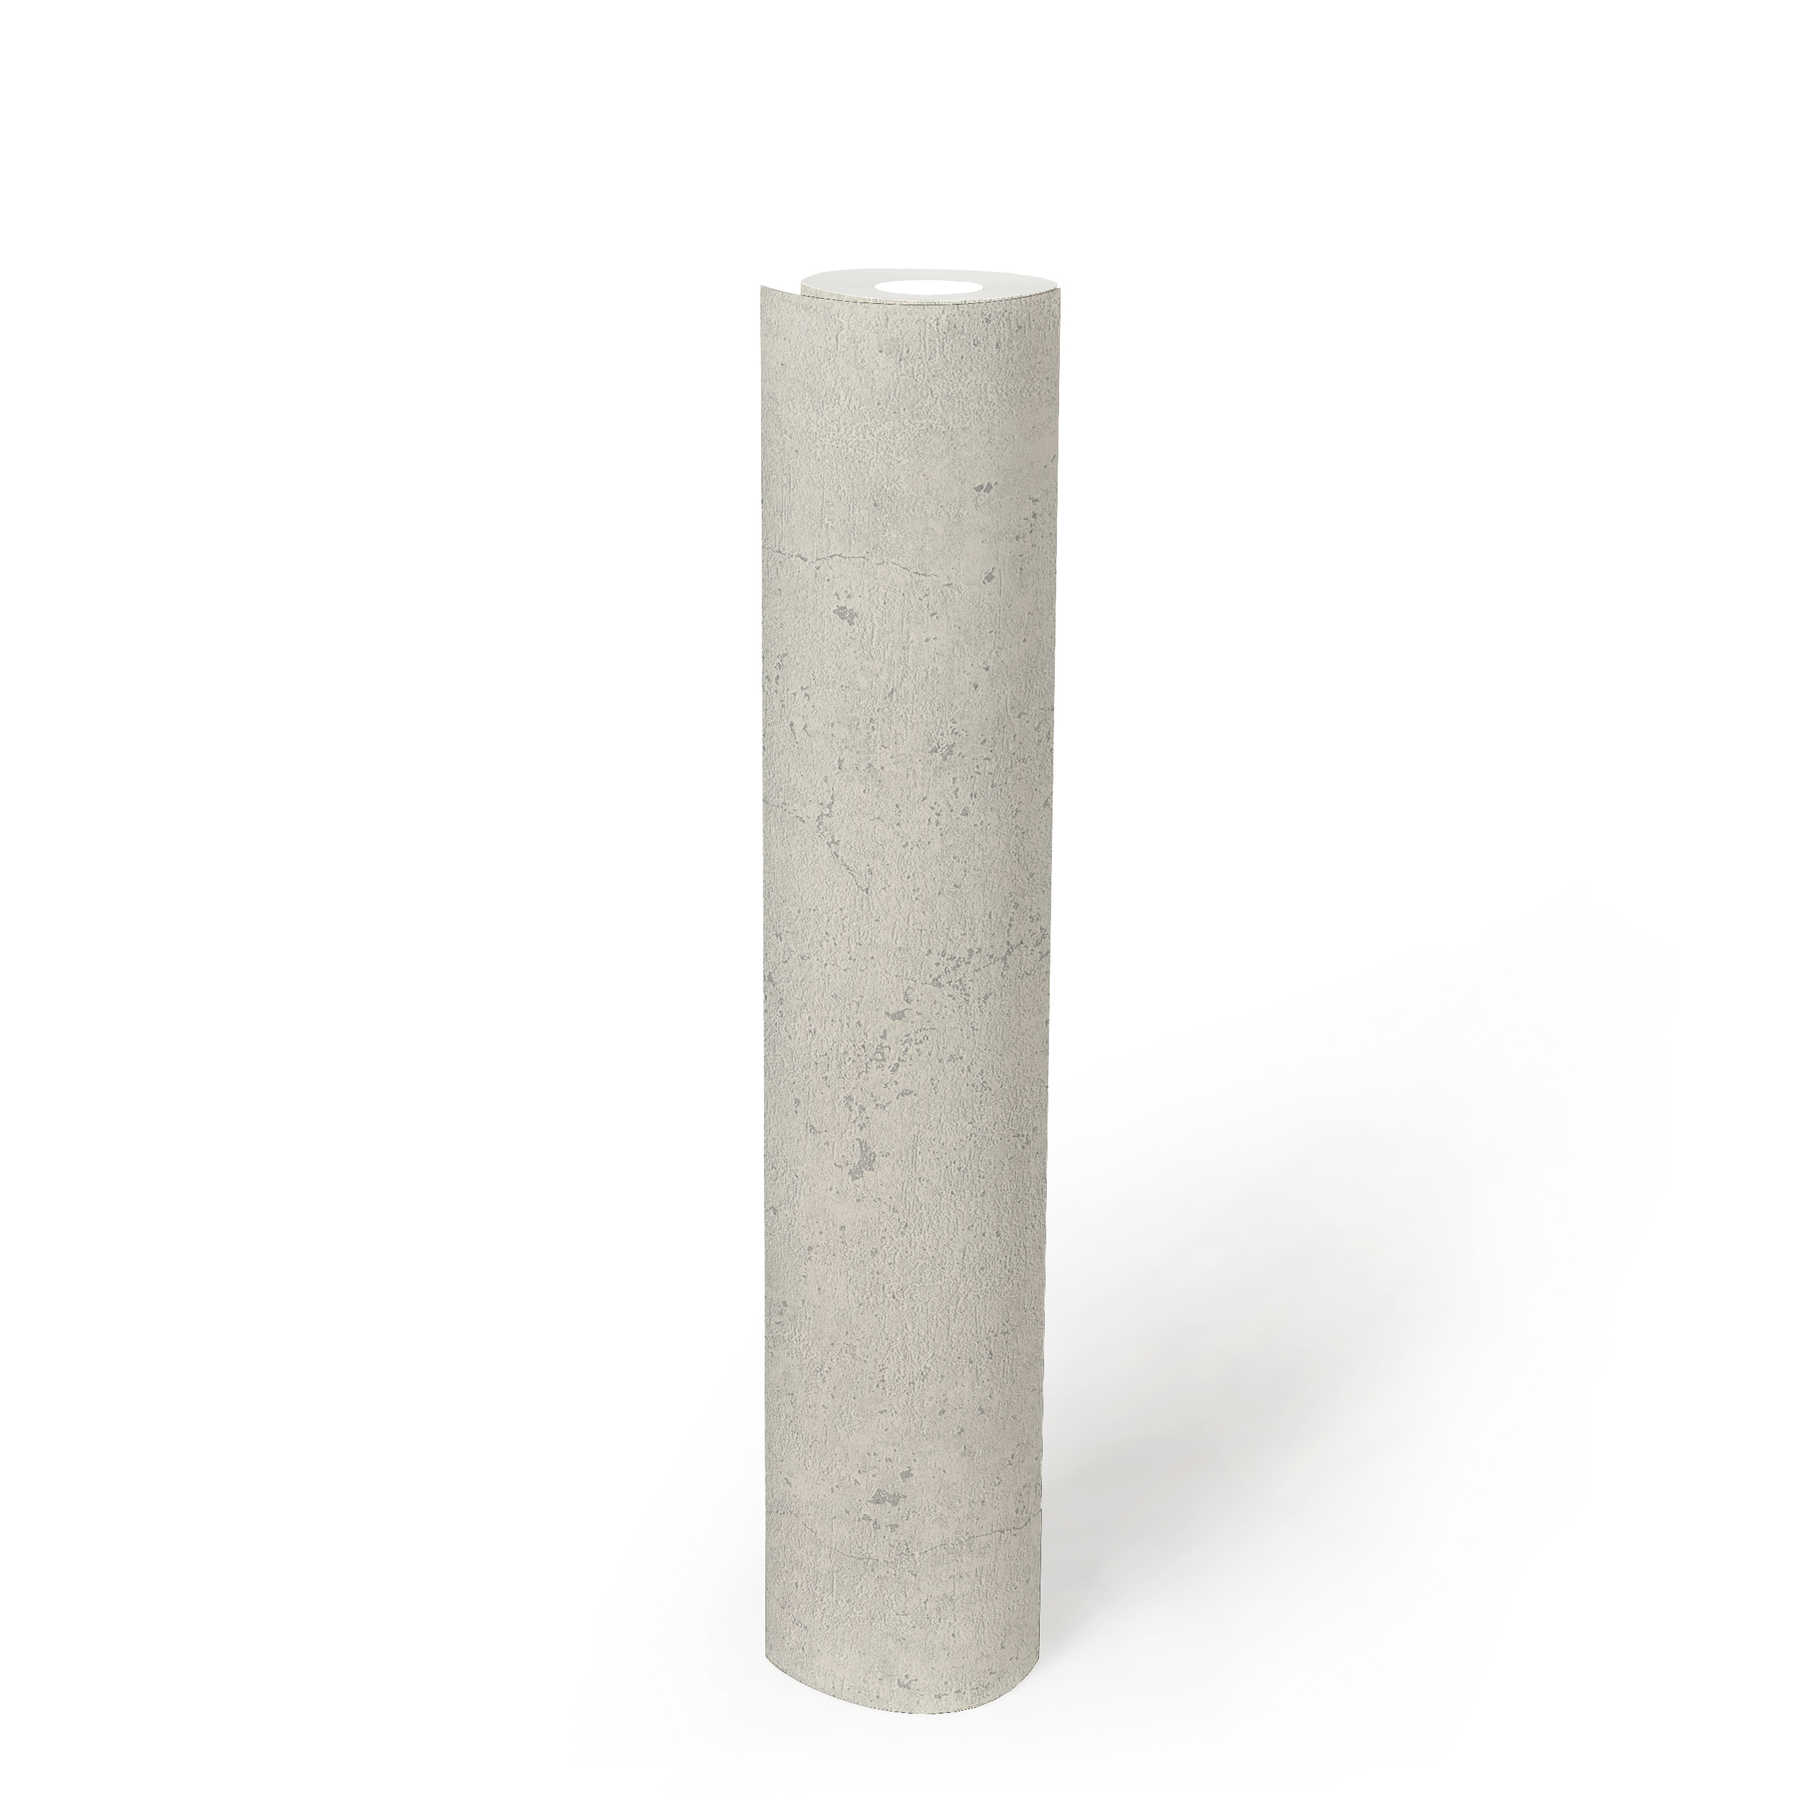             Wallpaper concrete look rustic in industrial style - light grey
        